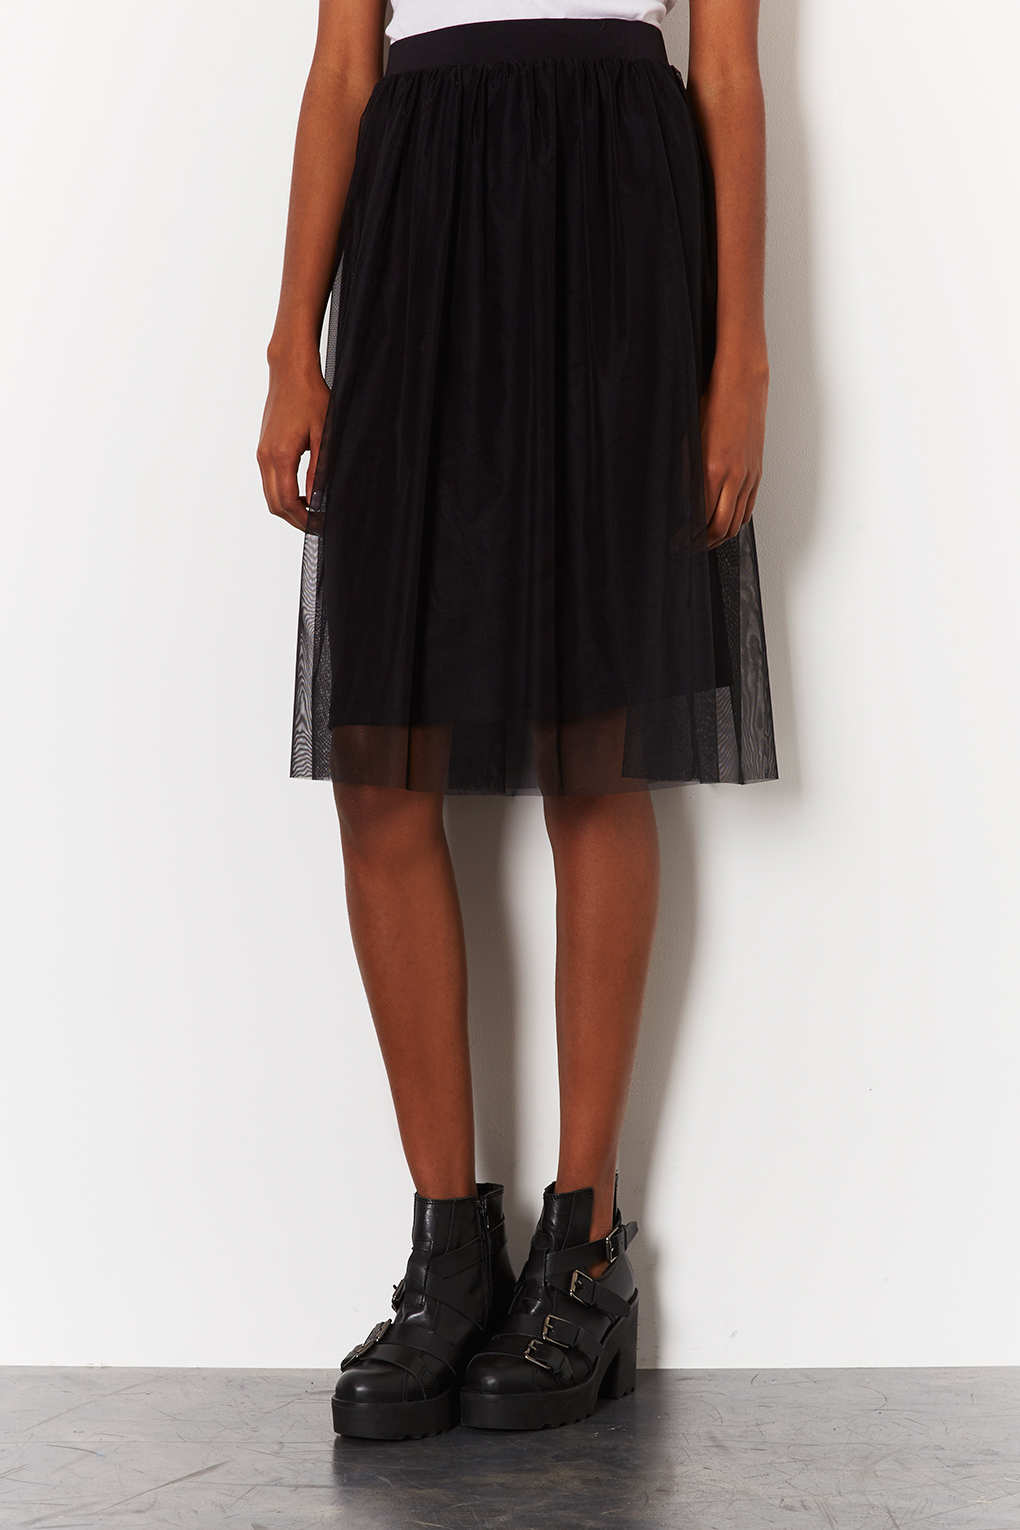 Lyst - Topshop Black Midi Tulle Skirt in Black